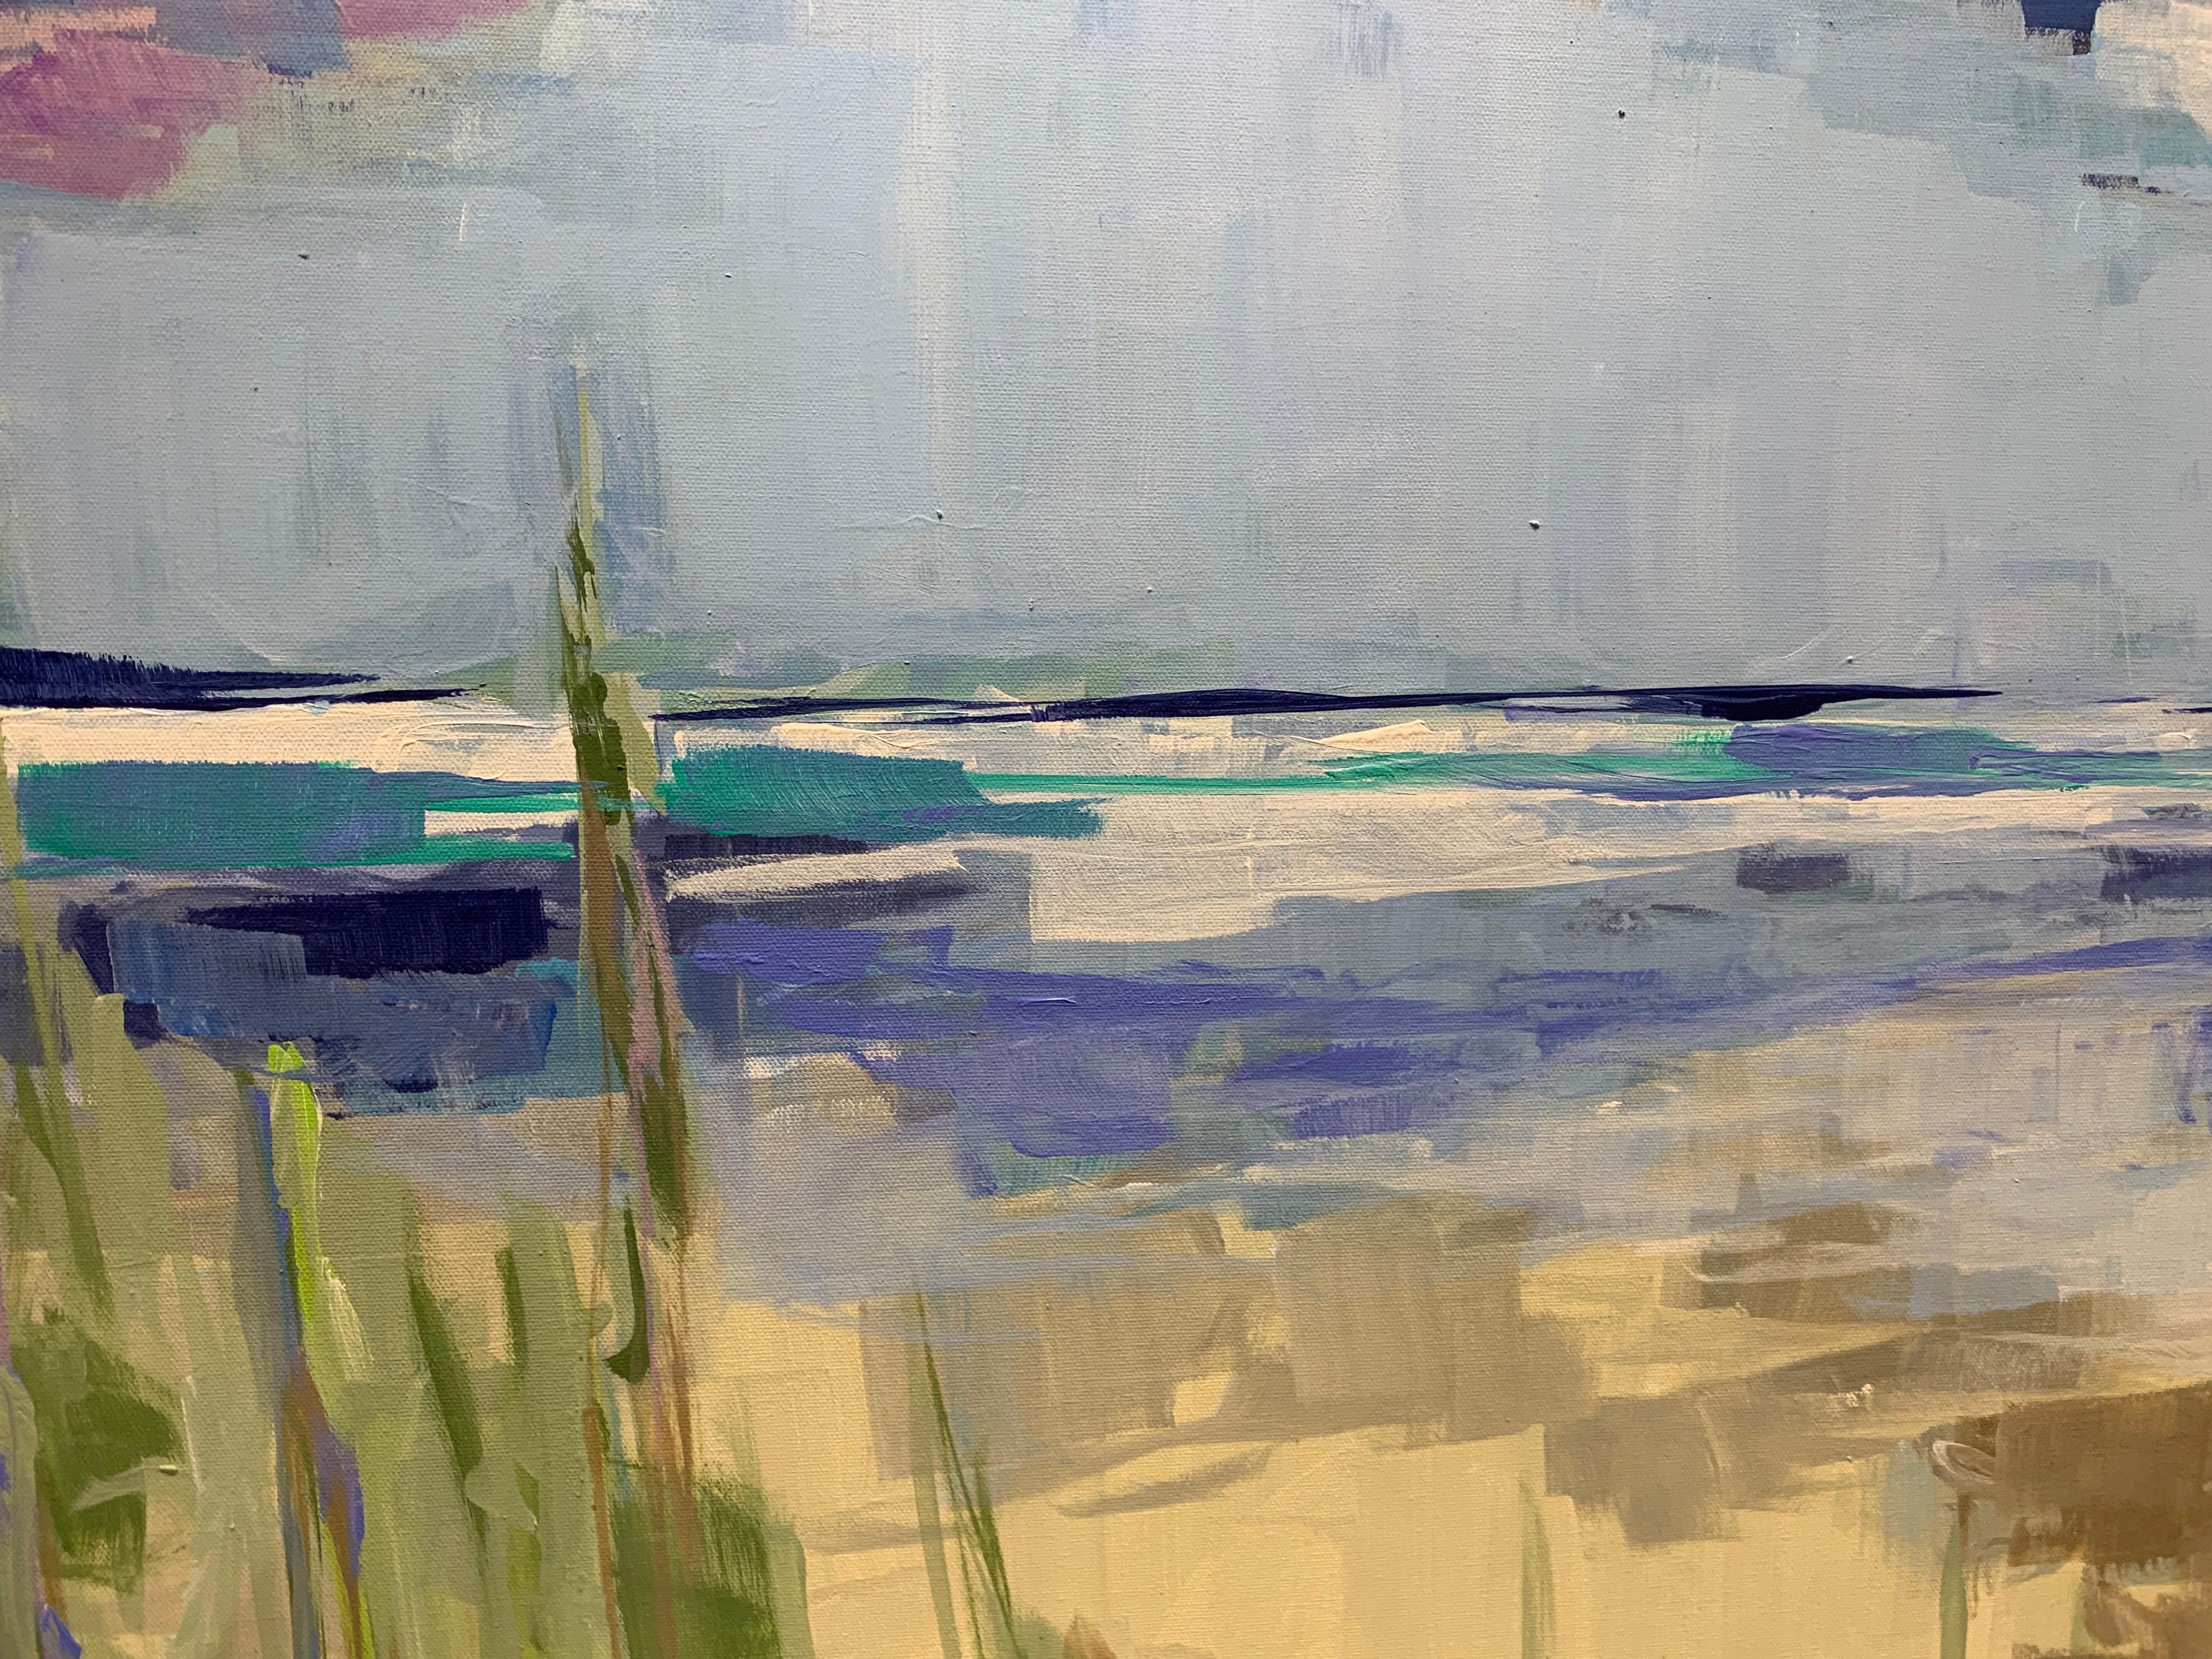 Salt Water Priorities by Sarah Caton Wynne, Large Square Beach Painting 6